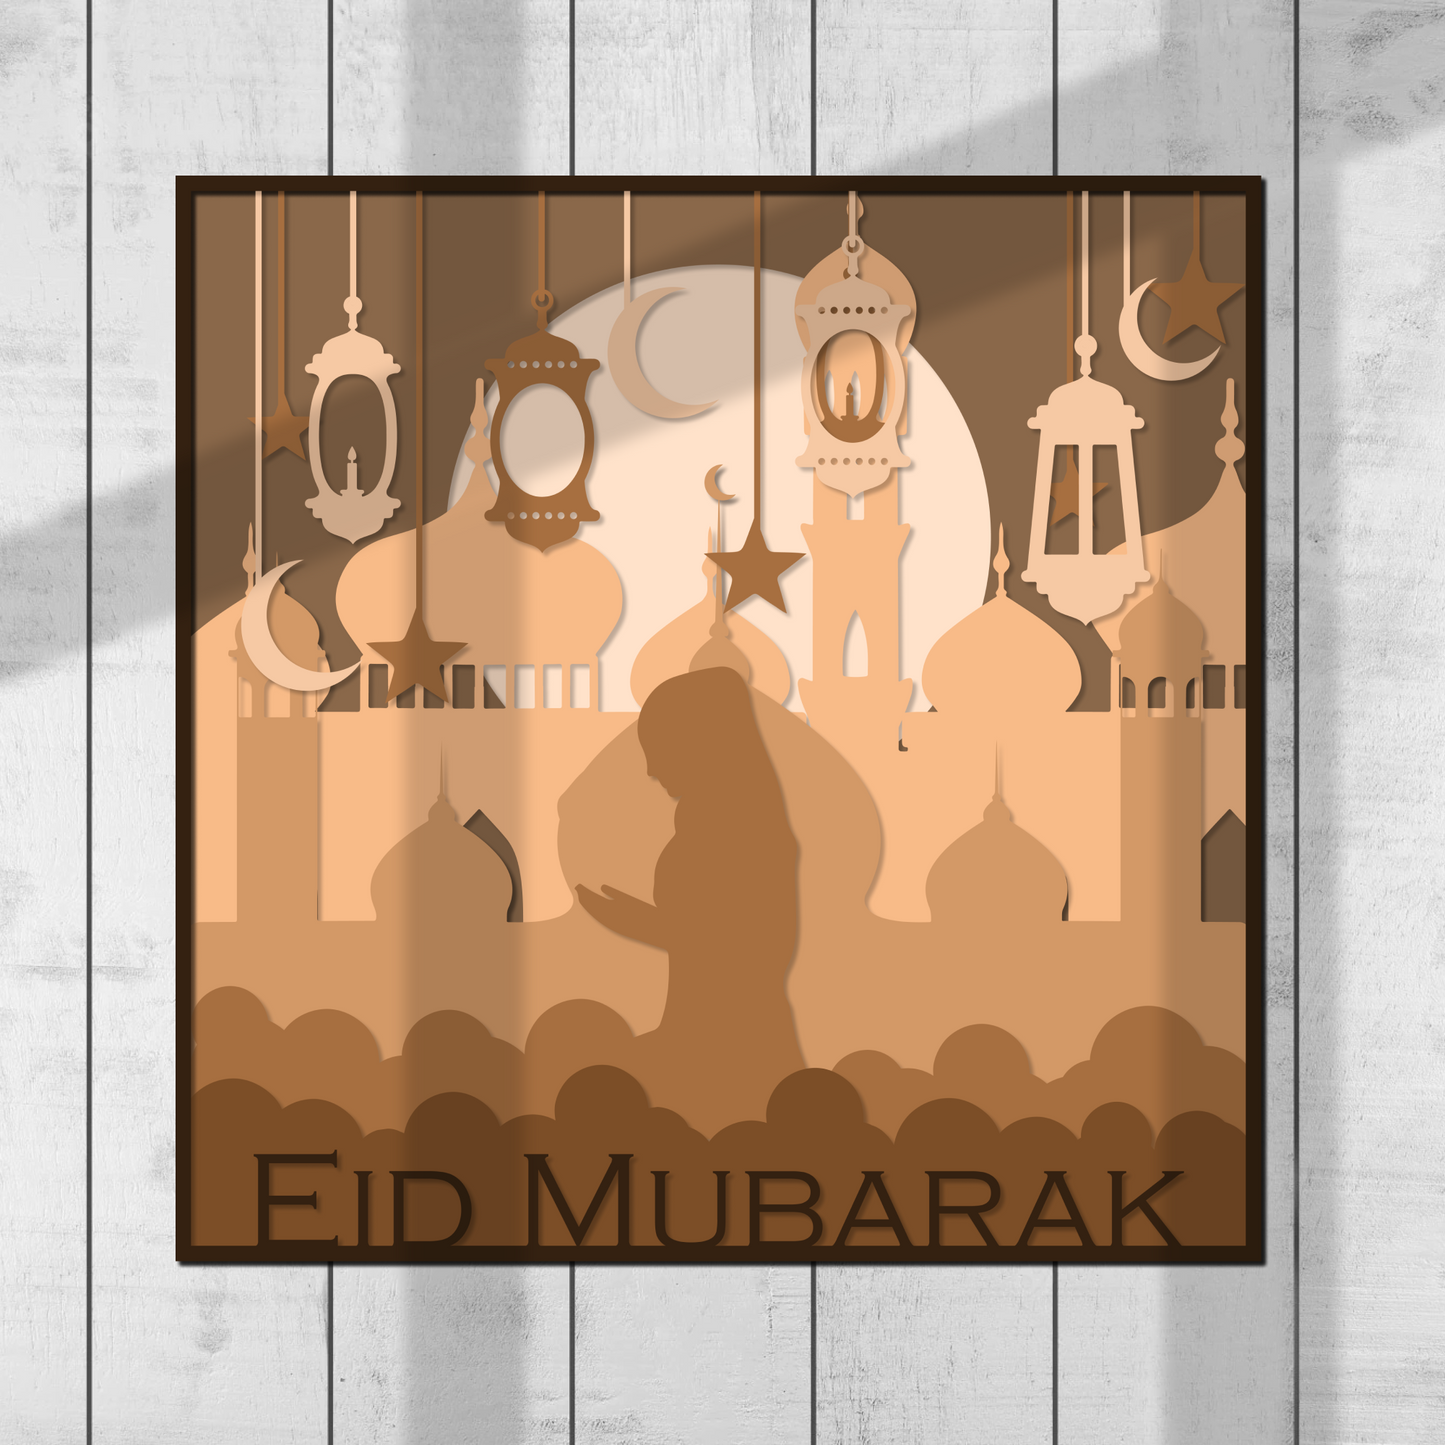 Ramadan Shadow Box Svg Cricut, Islamic Shadowbox Art, 3D Lightbox Svg, Eid Decoration, Papercut Light Box Template, Layered Laser Cut Files